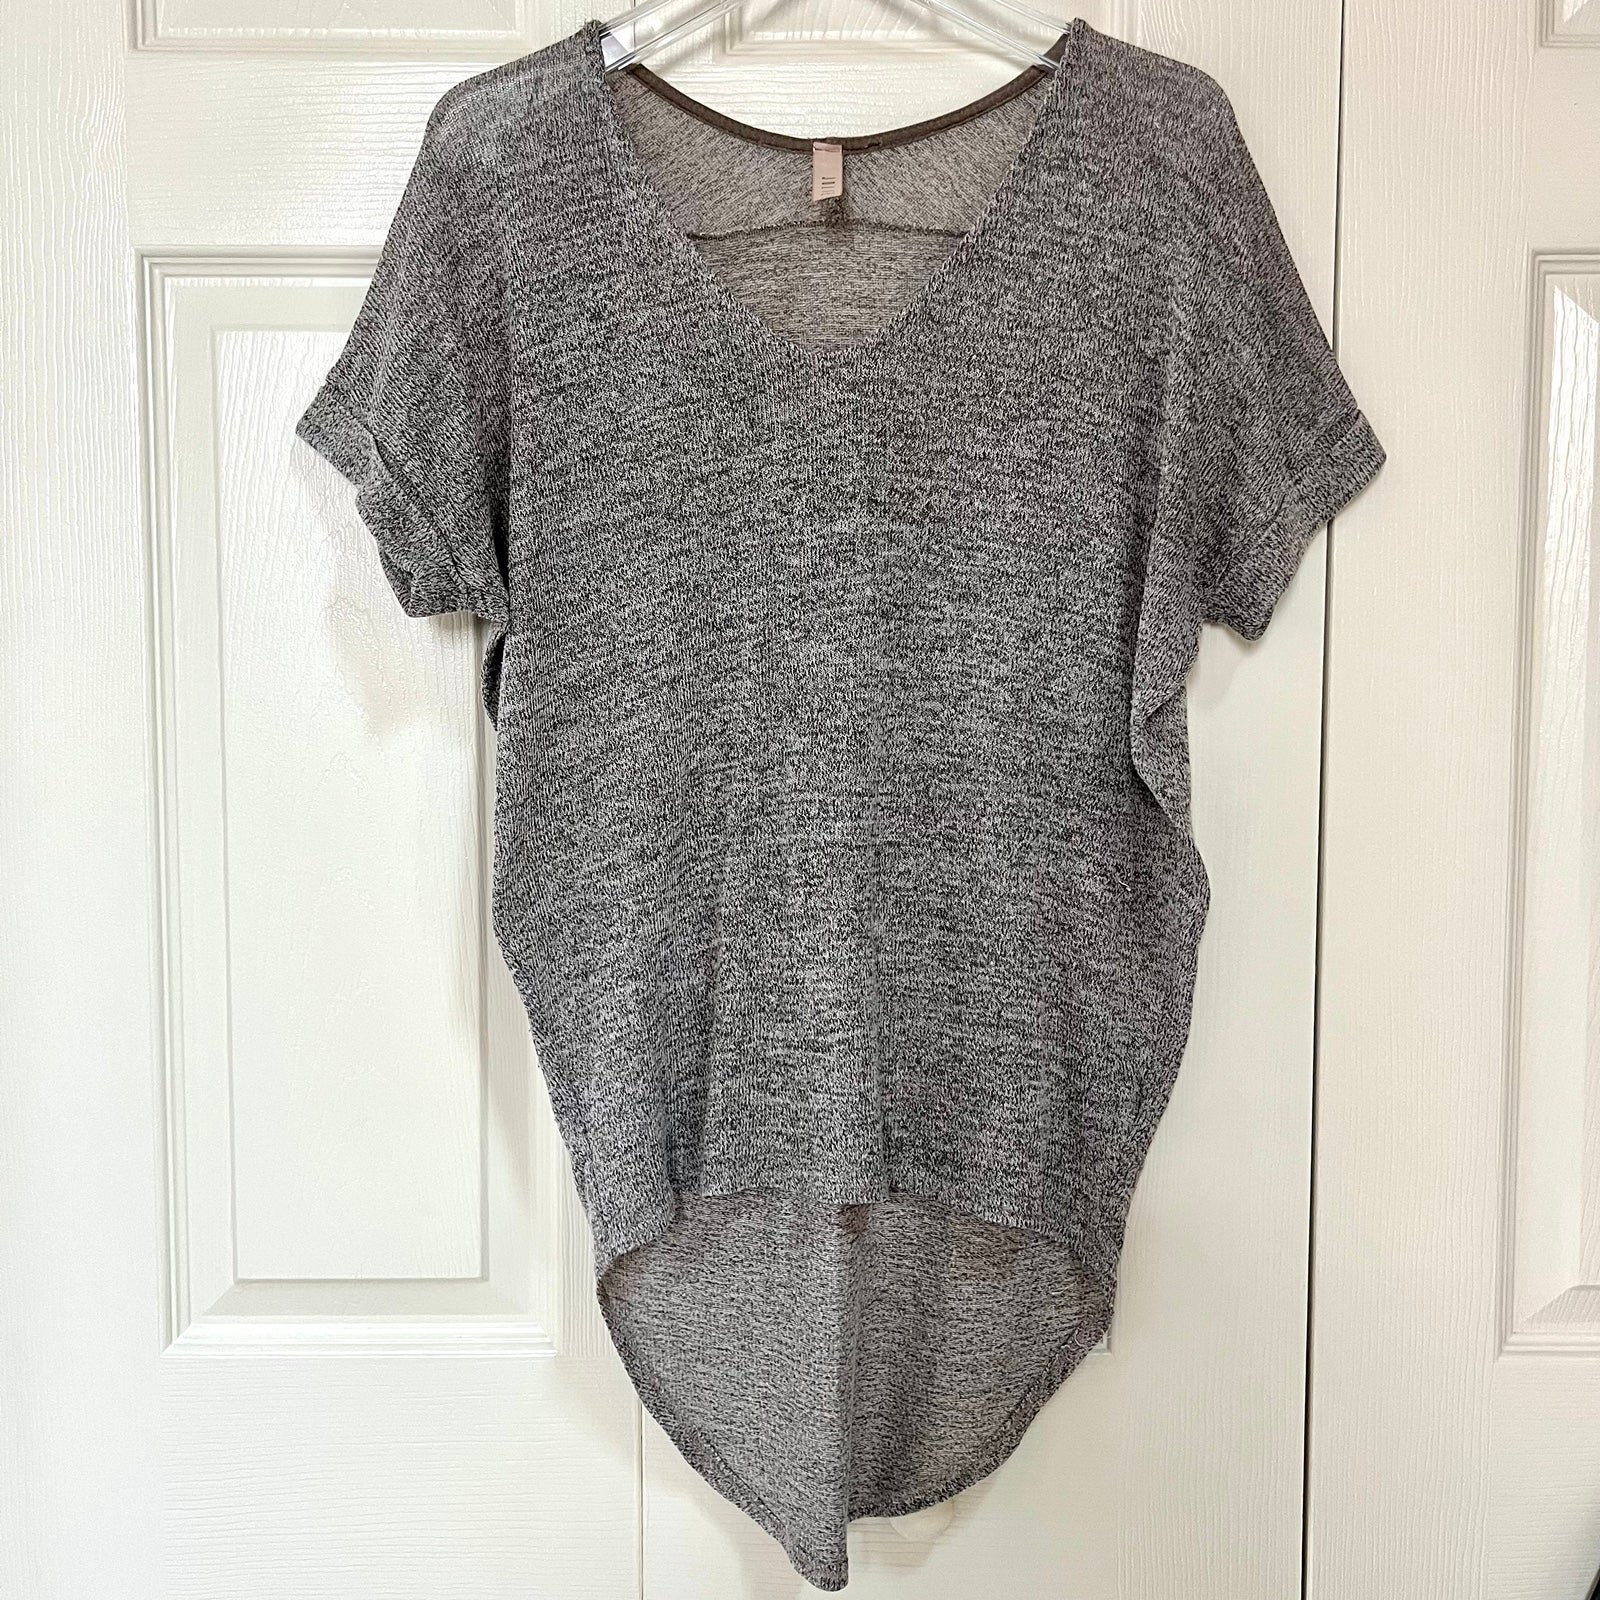 Wholesale price Jolie Lightweight Knit Short-Sleeve Hi-